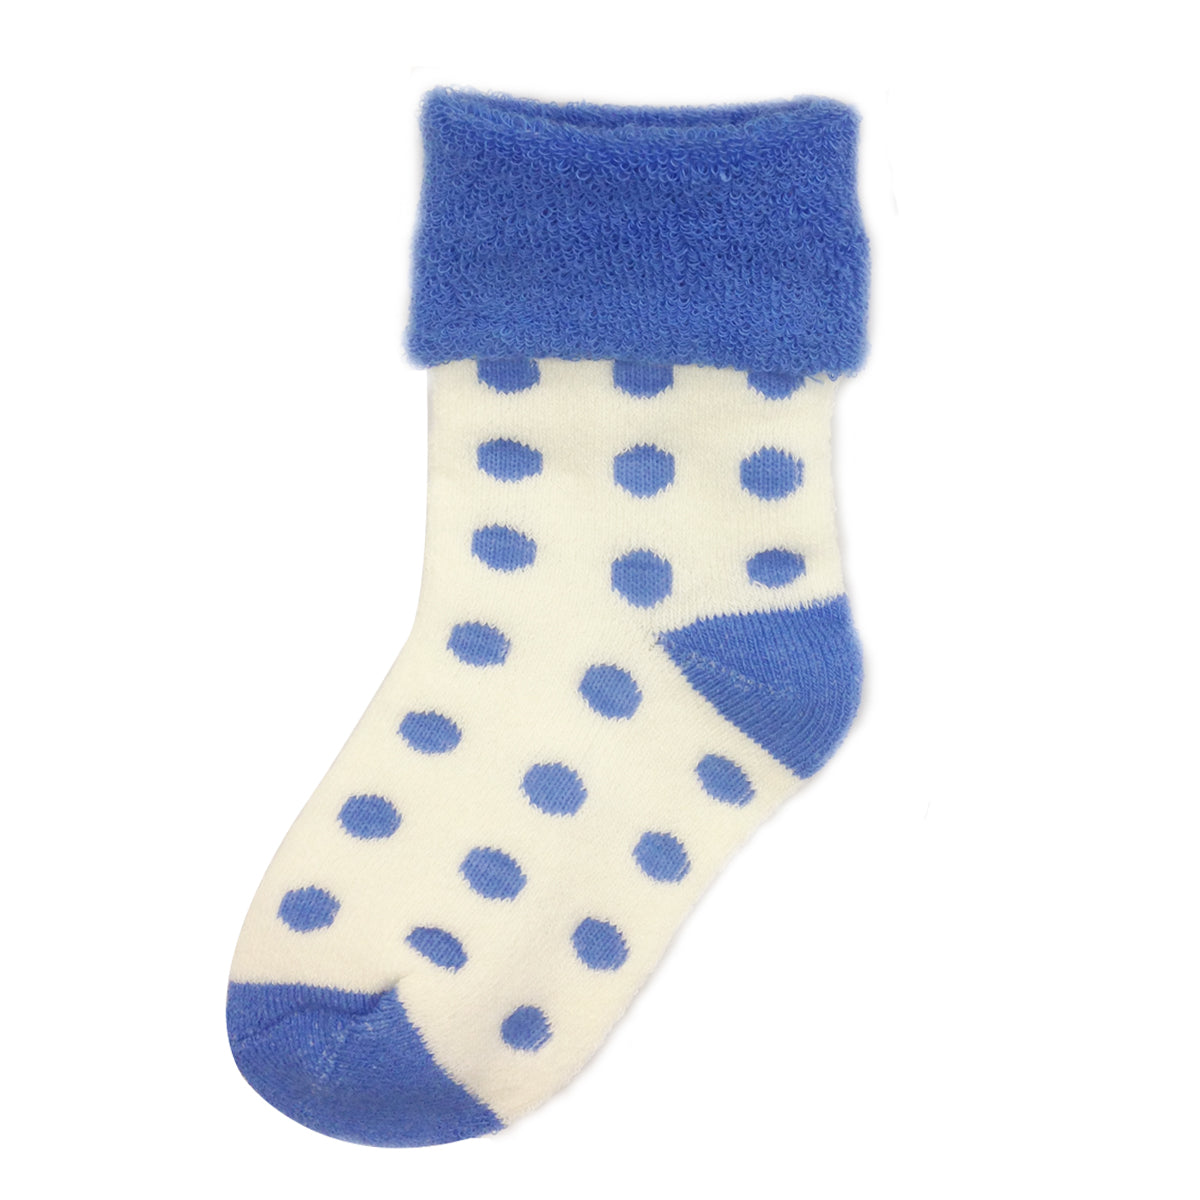 Wrapables Polka Dot Baby Socks, Set of 5 [ A63737, A63738, A63740, A63741, A63742]